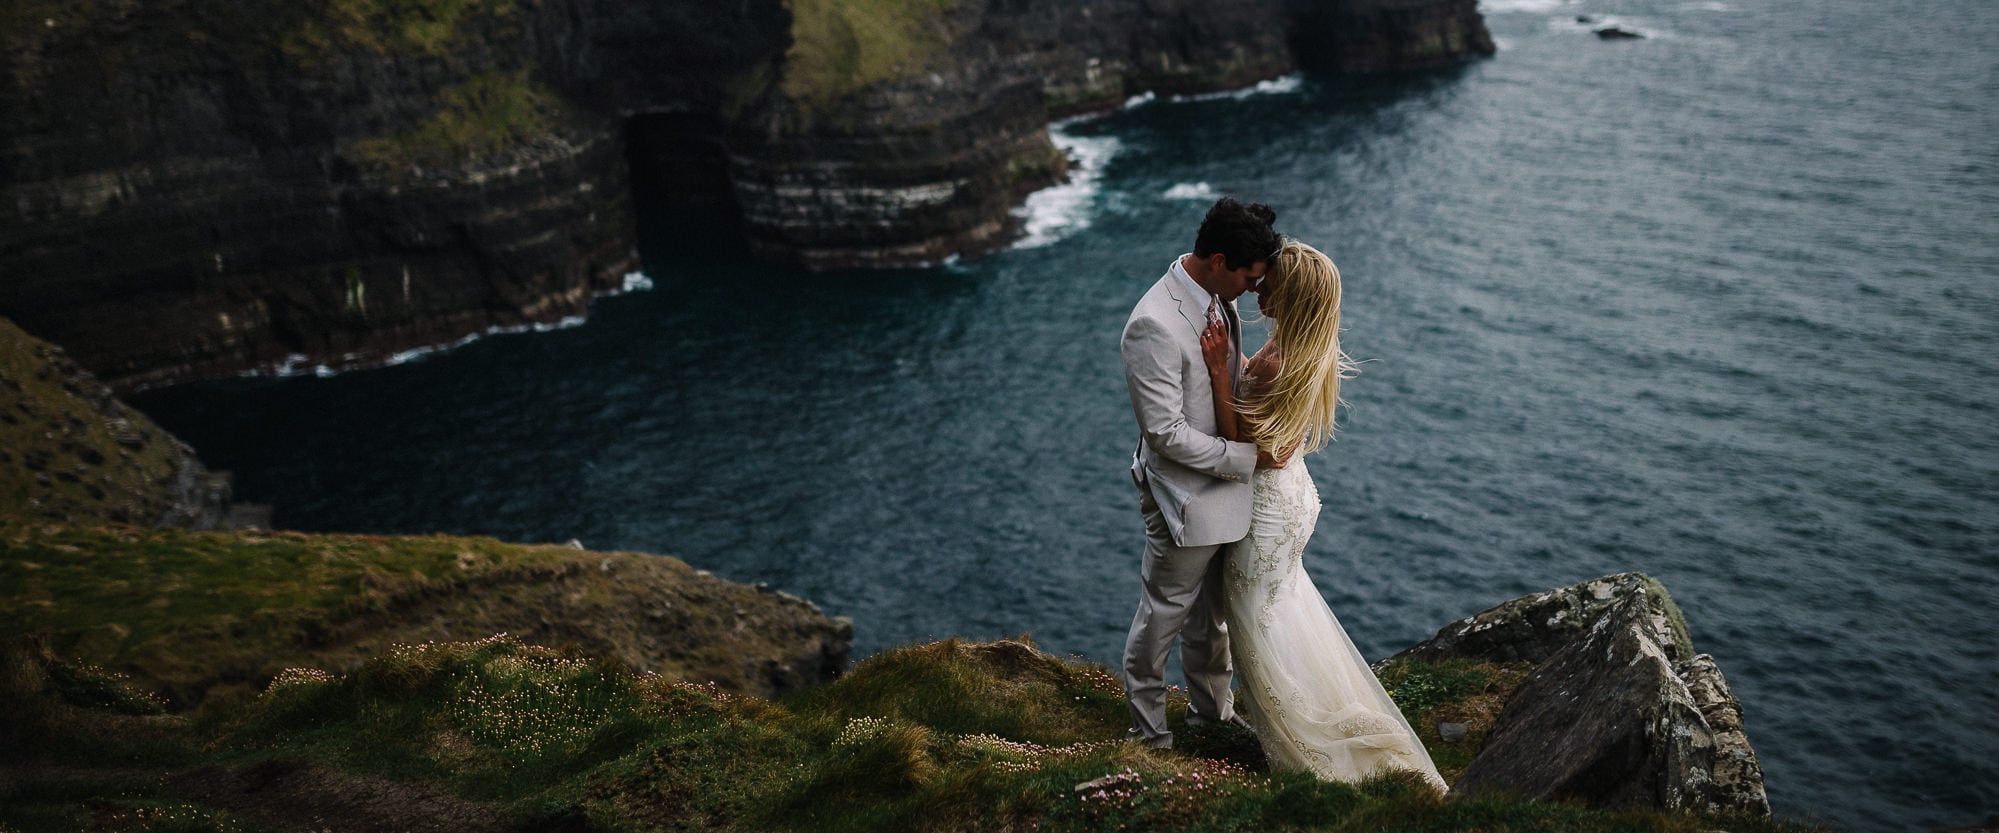 Alternative wedding photographer Intimate cliffs of Moher wedding